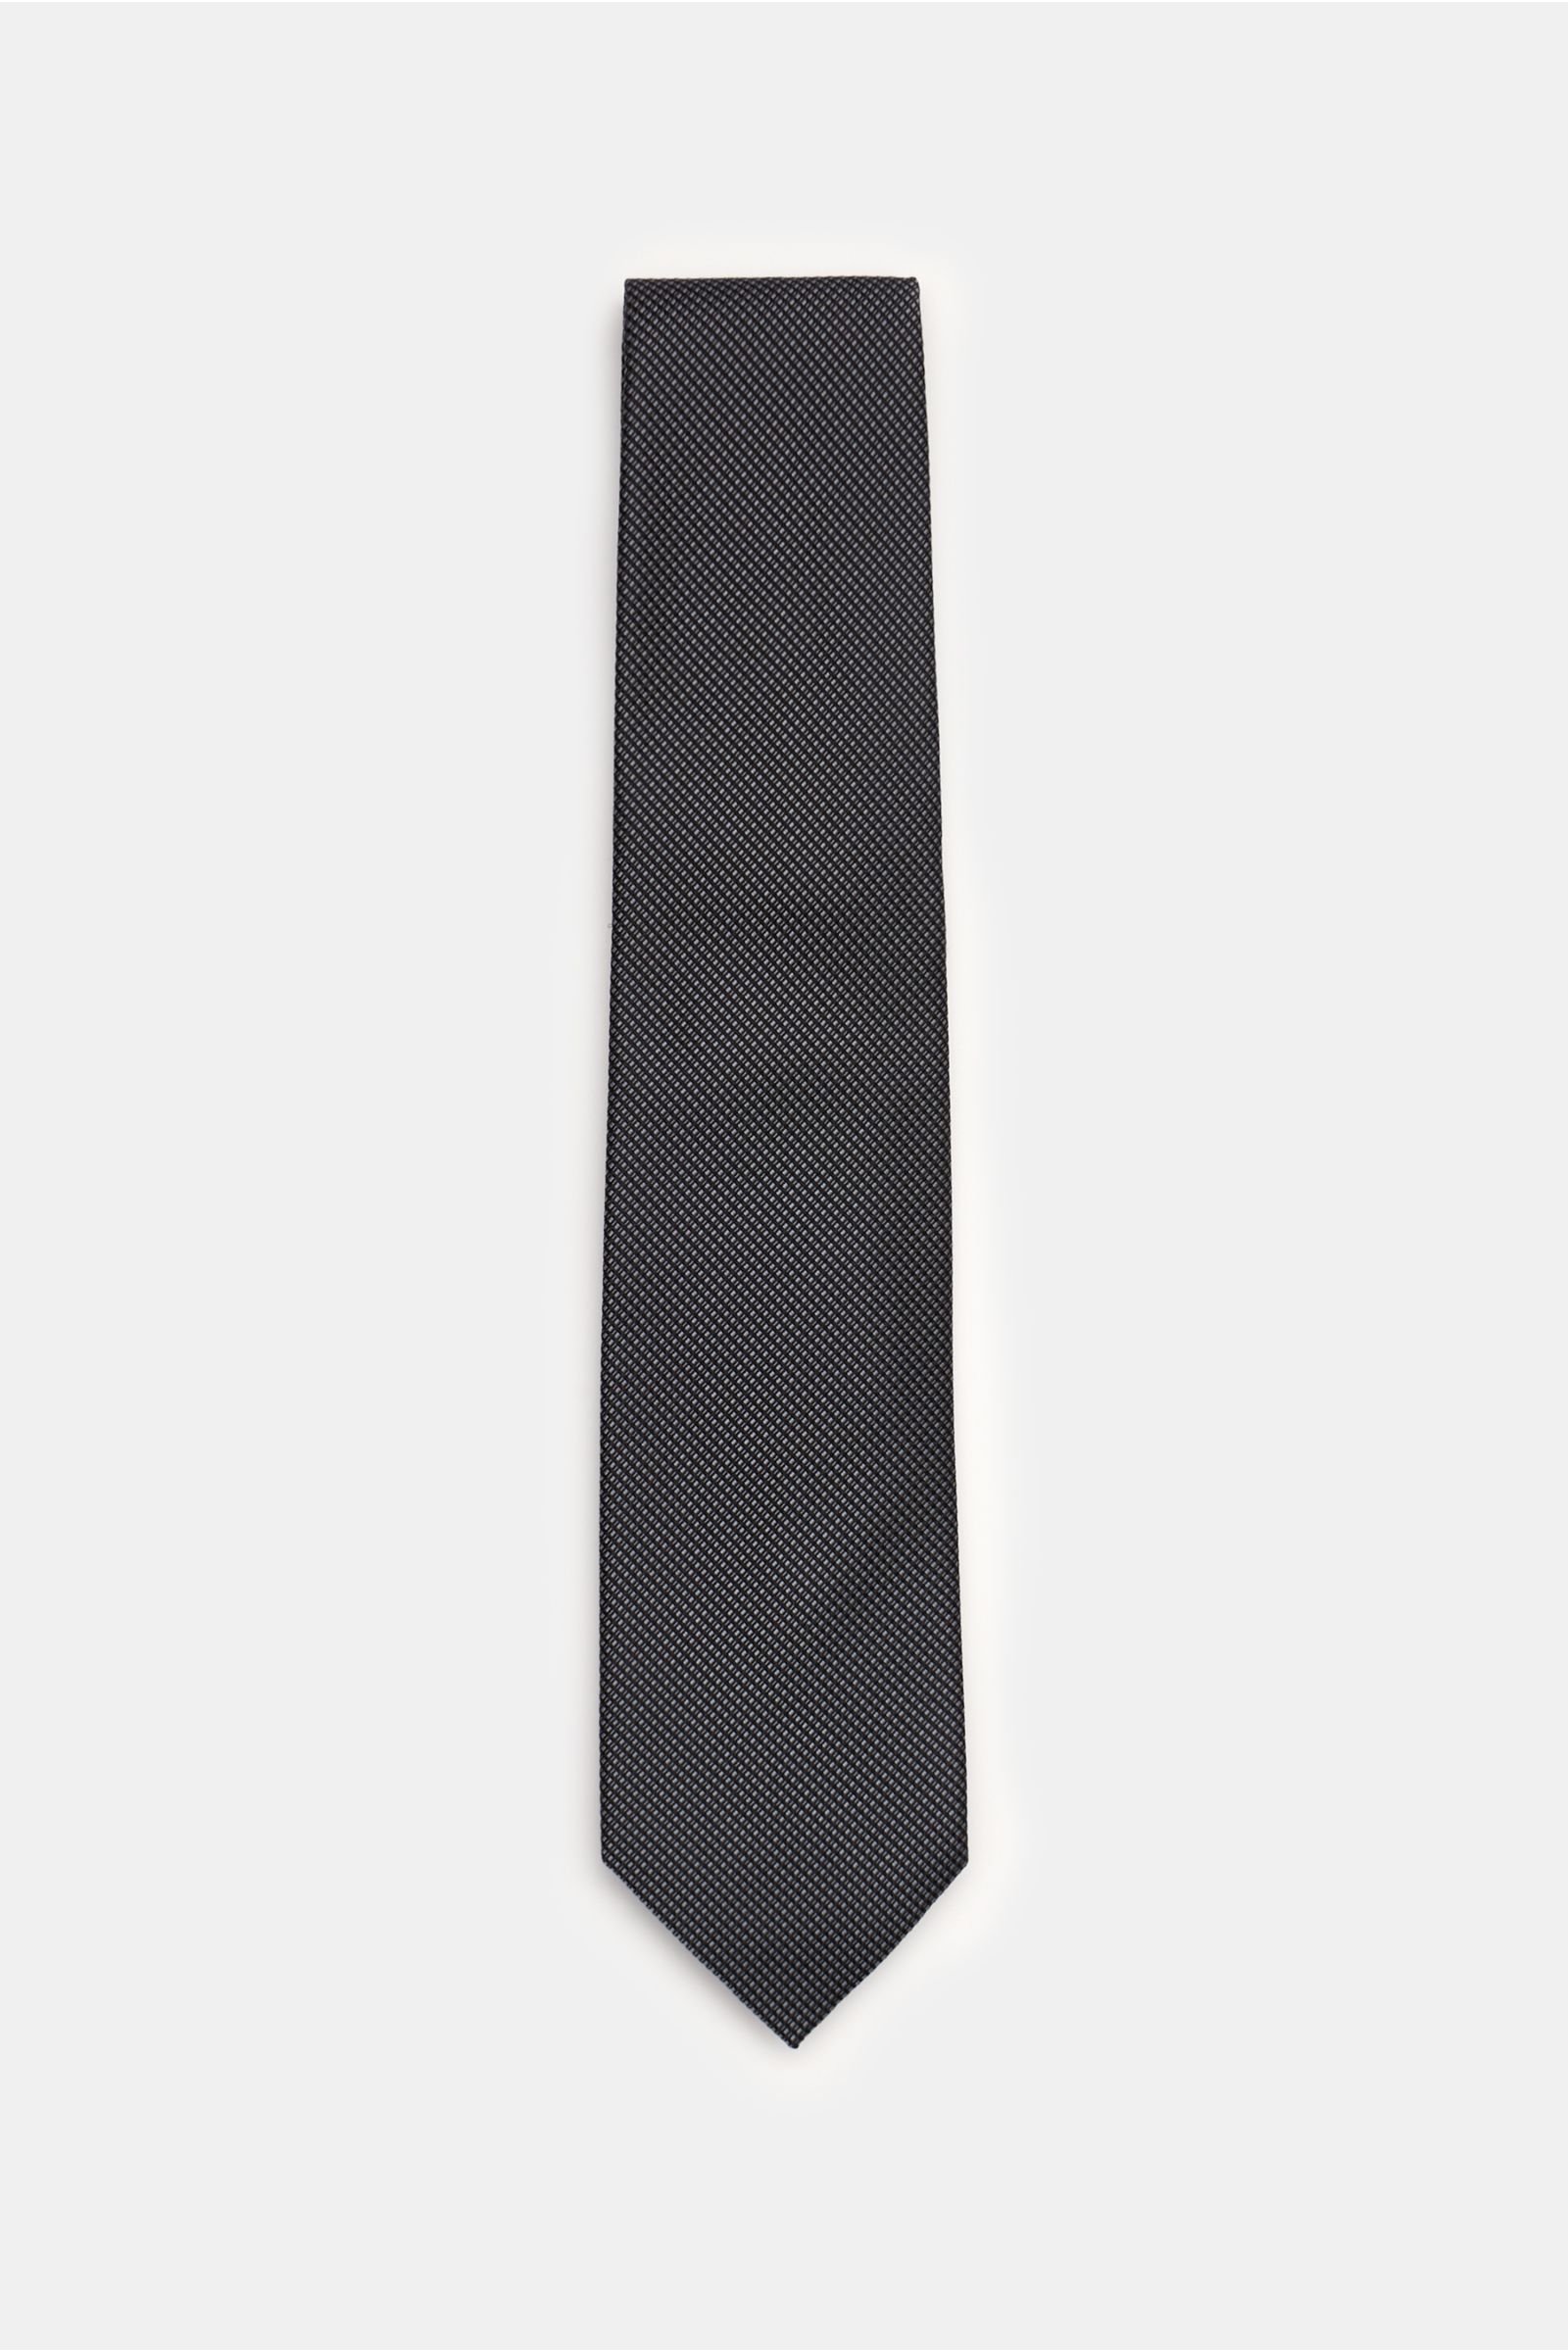 Silk tie dark grey/black